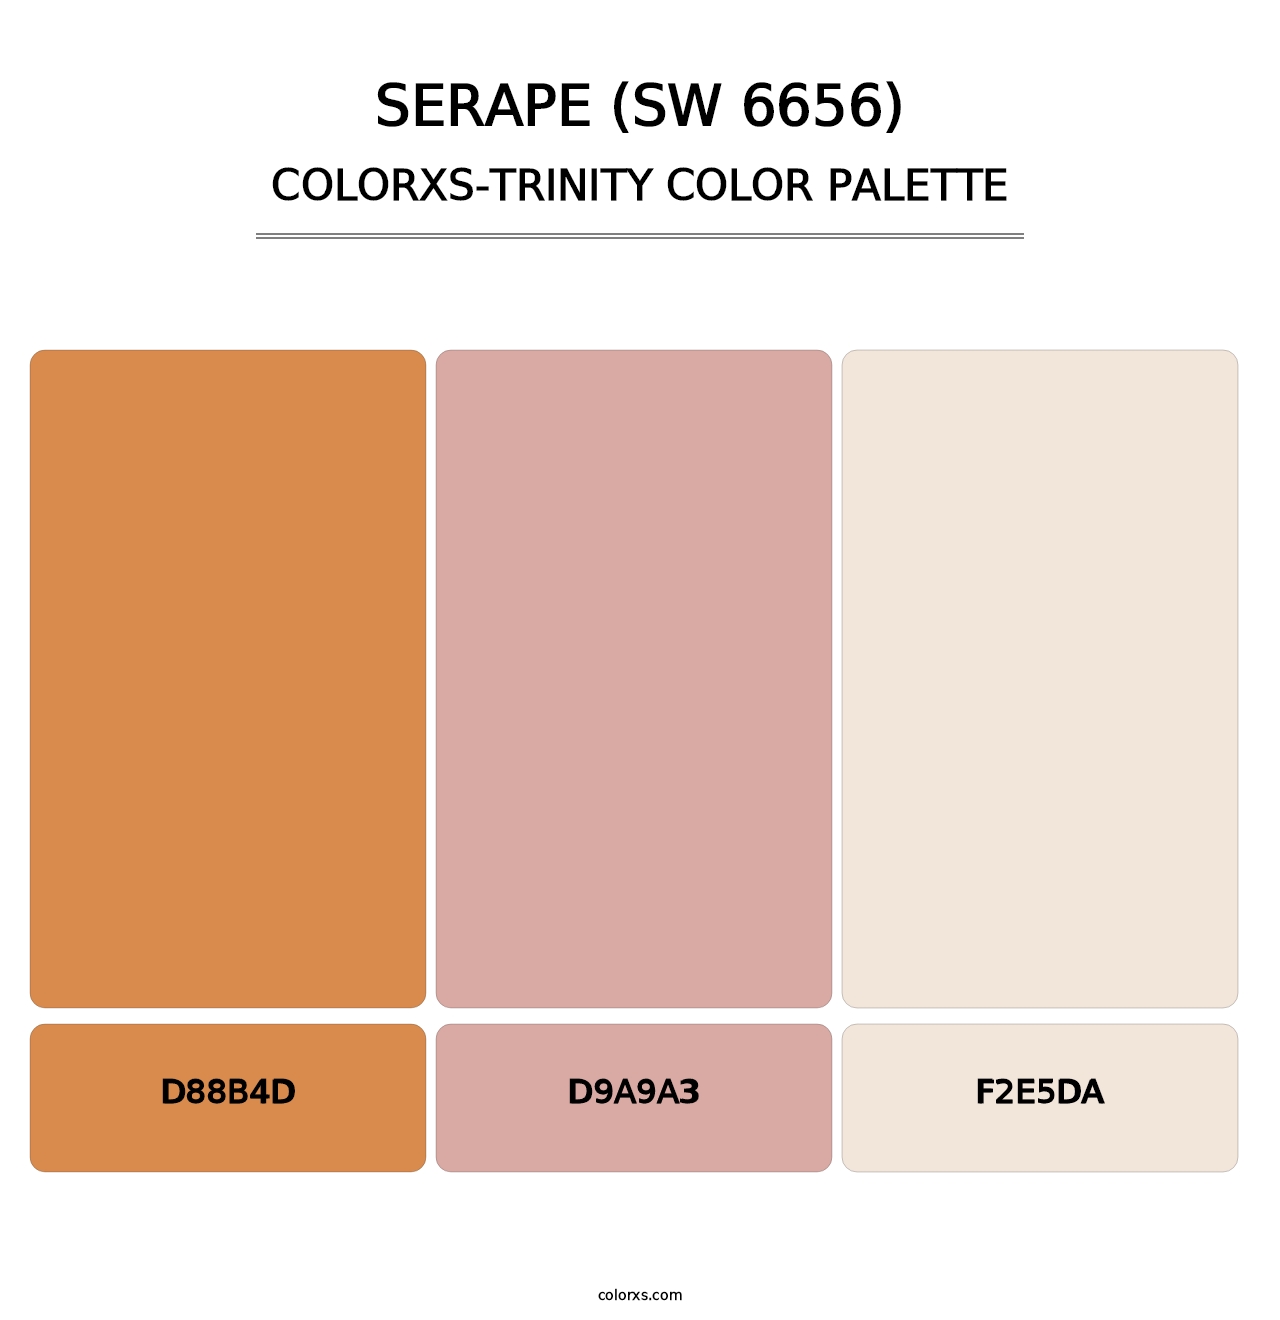 Serape (SW 6656) - Colorxs Trinity Palette